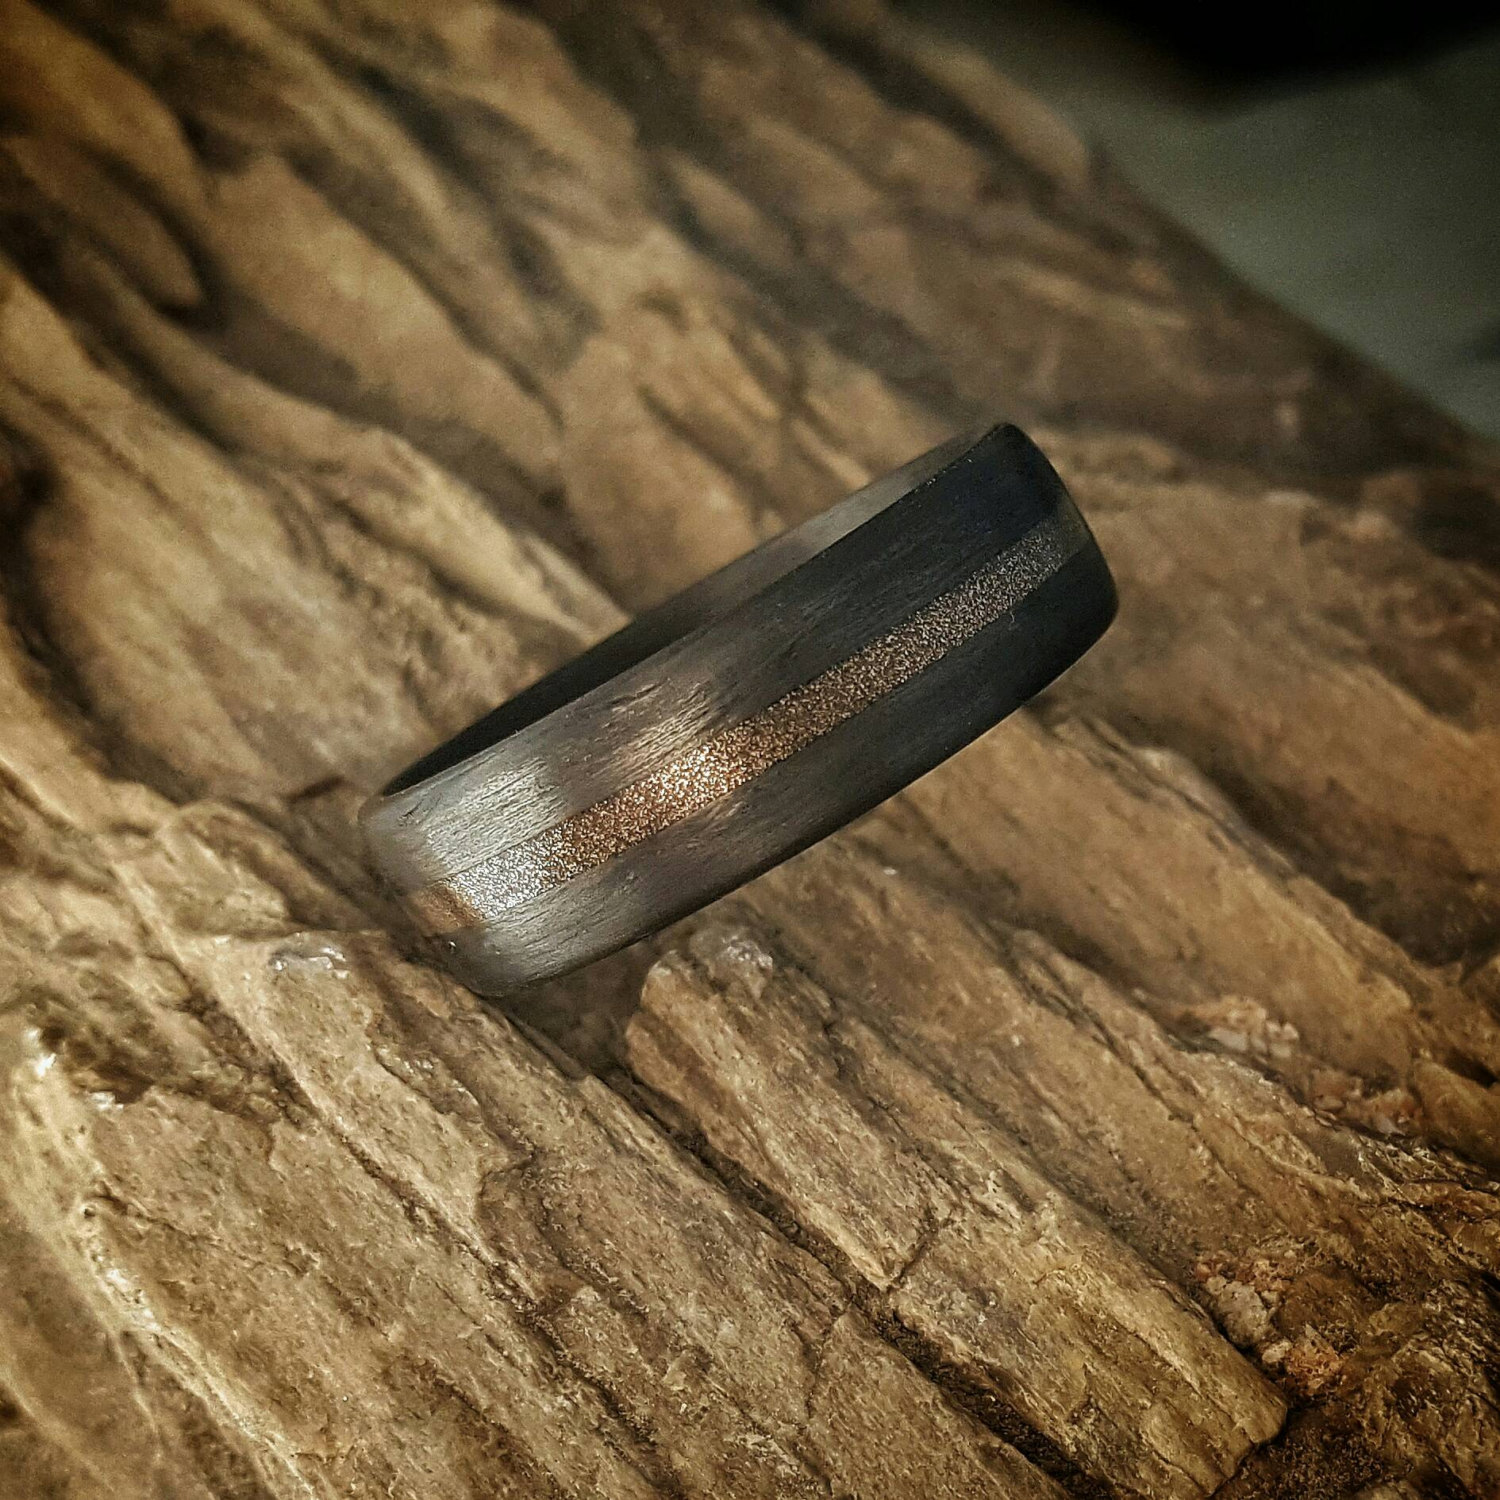 custom made carbon fiber ring for your wedding